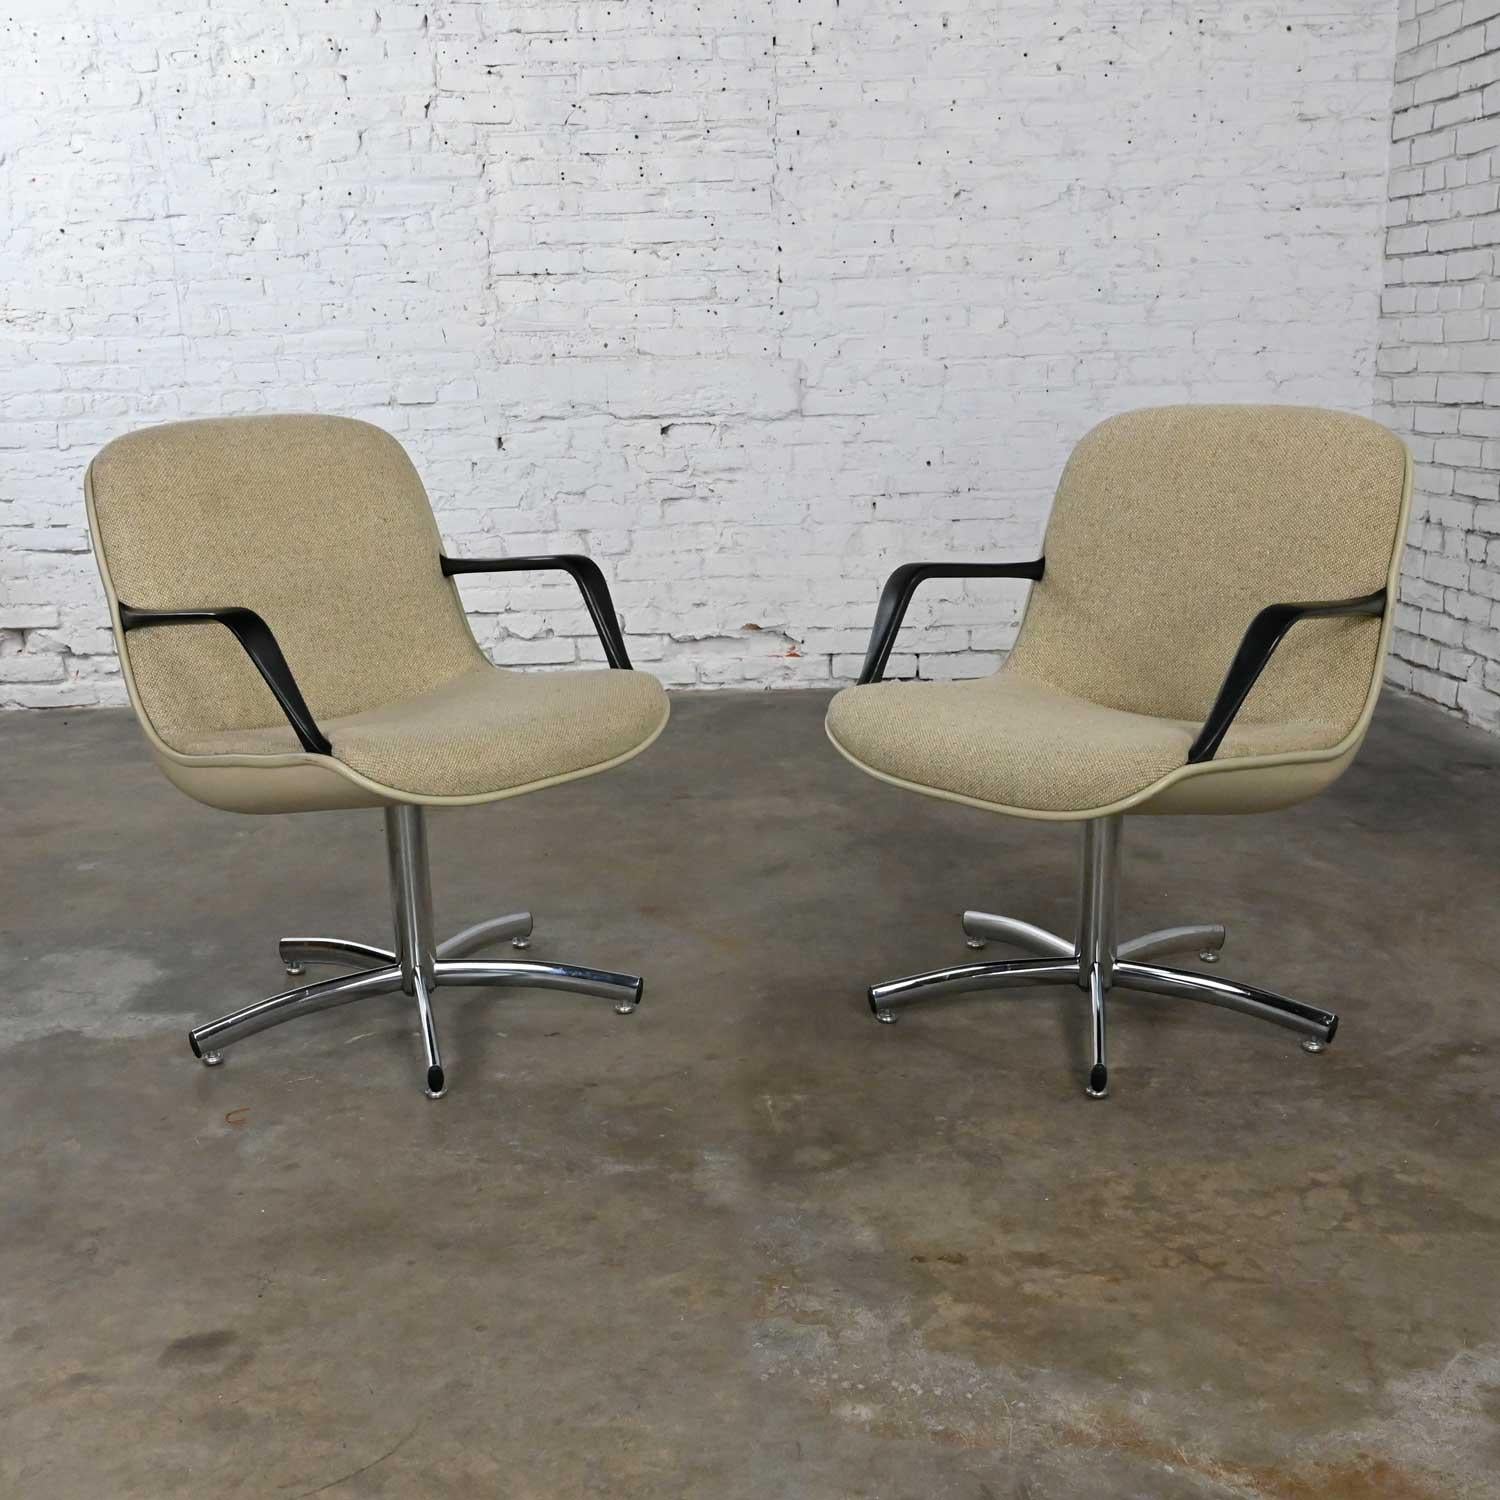 20ième siècle Steelcase Modern Steelcase n°451 5 chaises de bureau à base chromée style Charles Pollock Pr